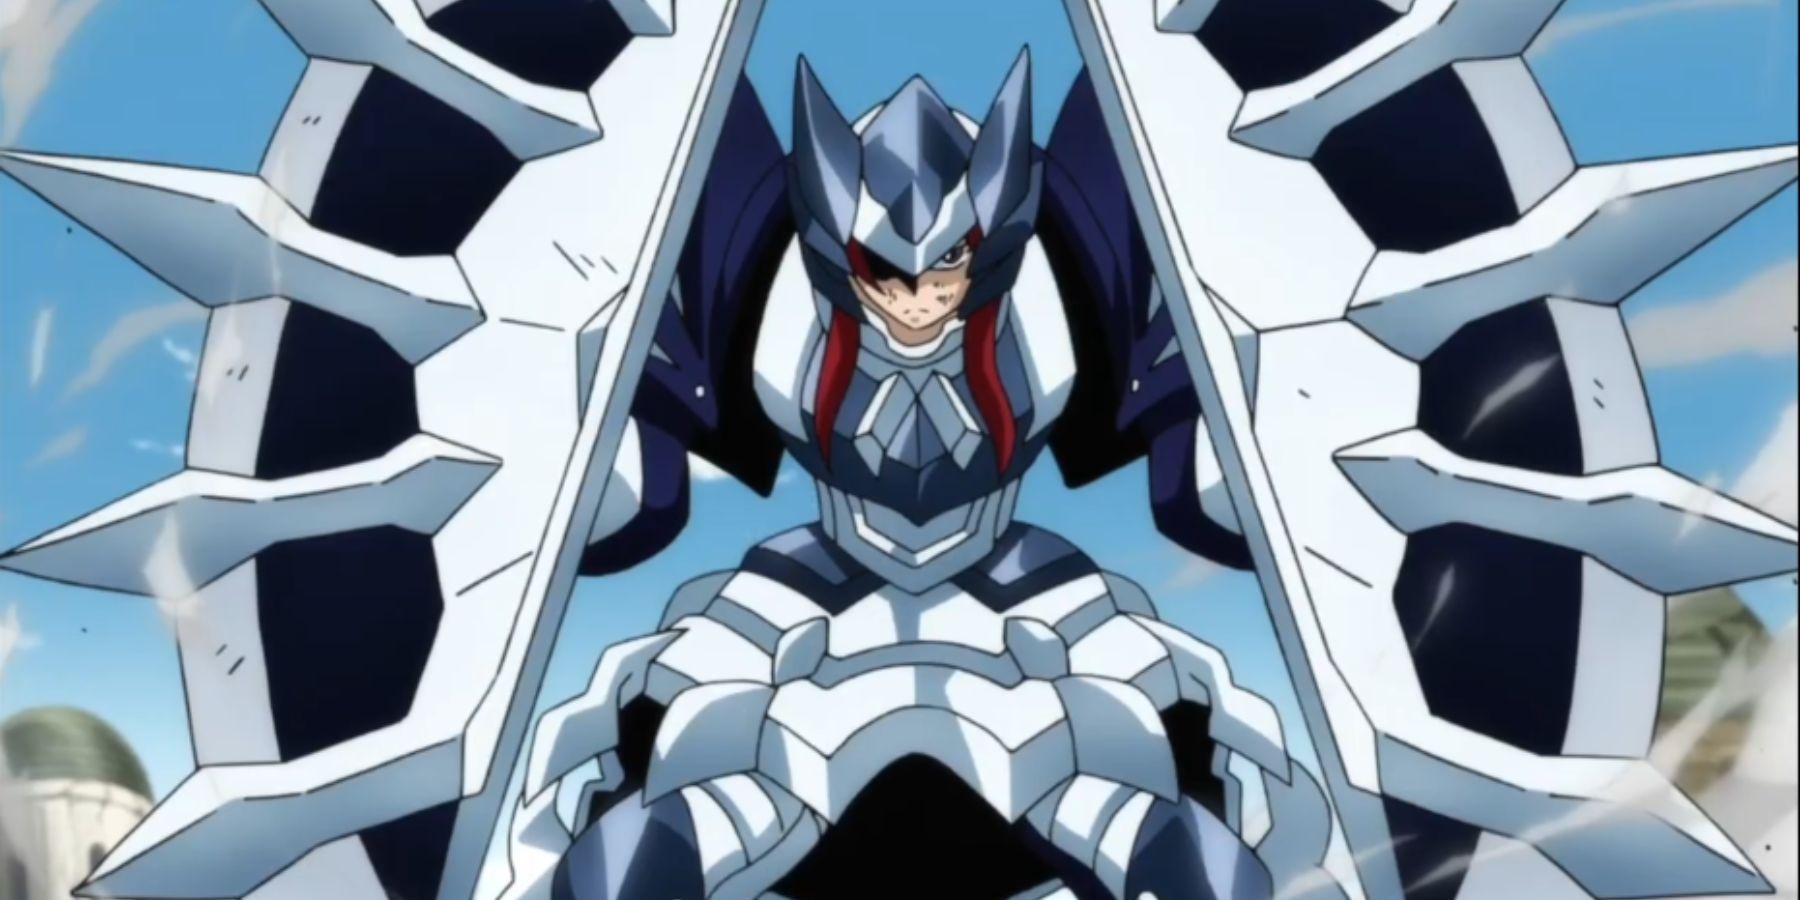 IGON - We protect each other Anime: Shield Hero | Facebook